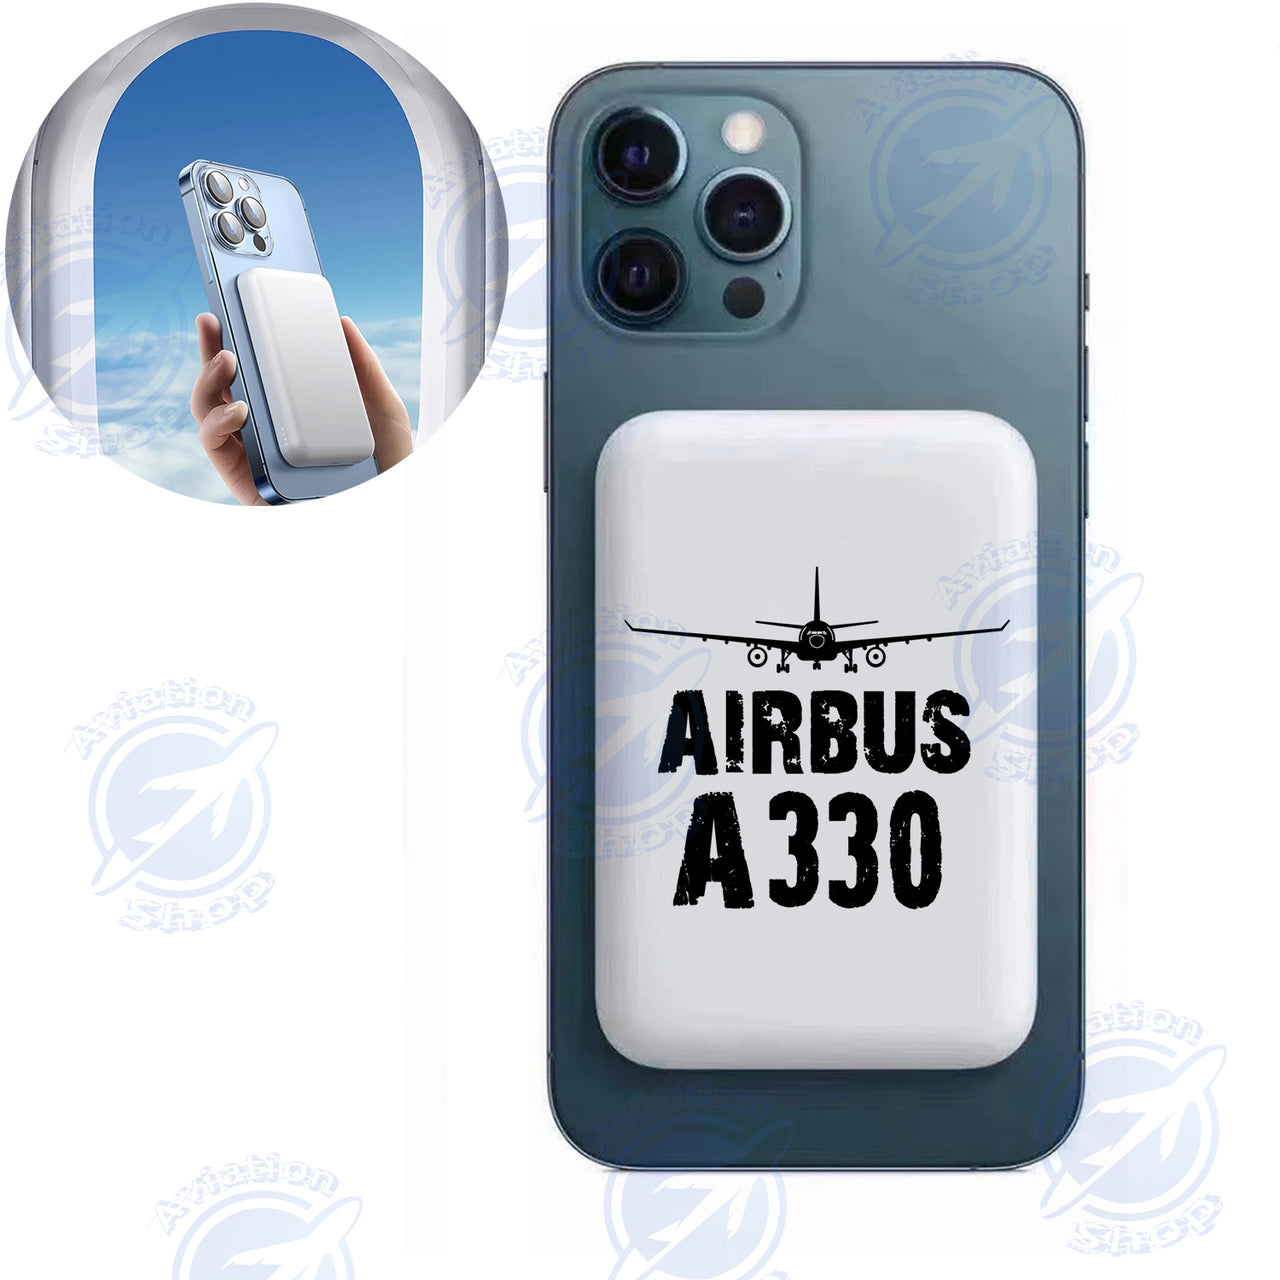 Airbus A330 & Plane Designed MagSafe PowerBanks